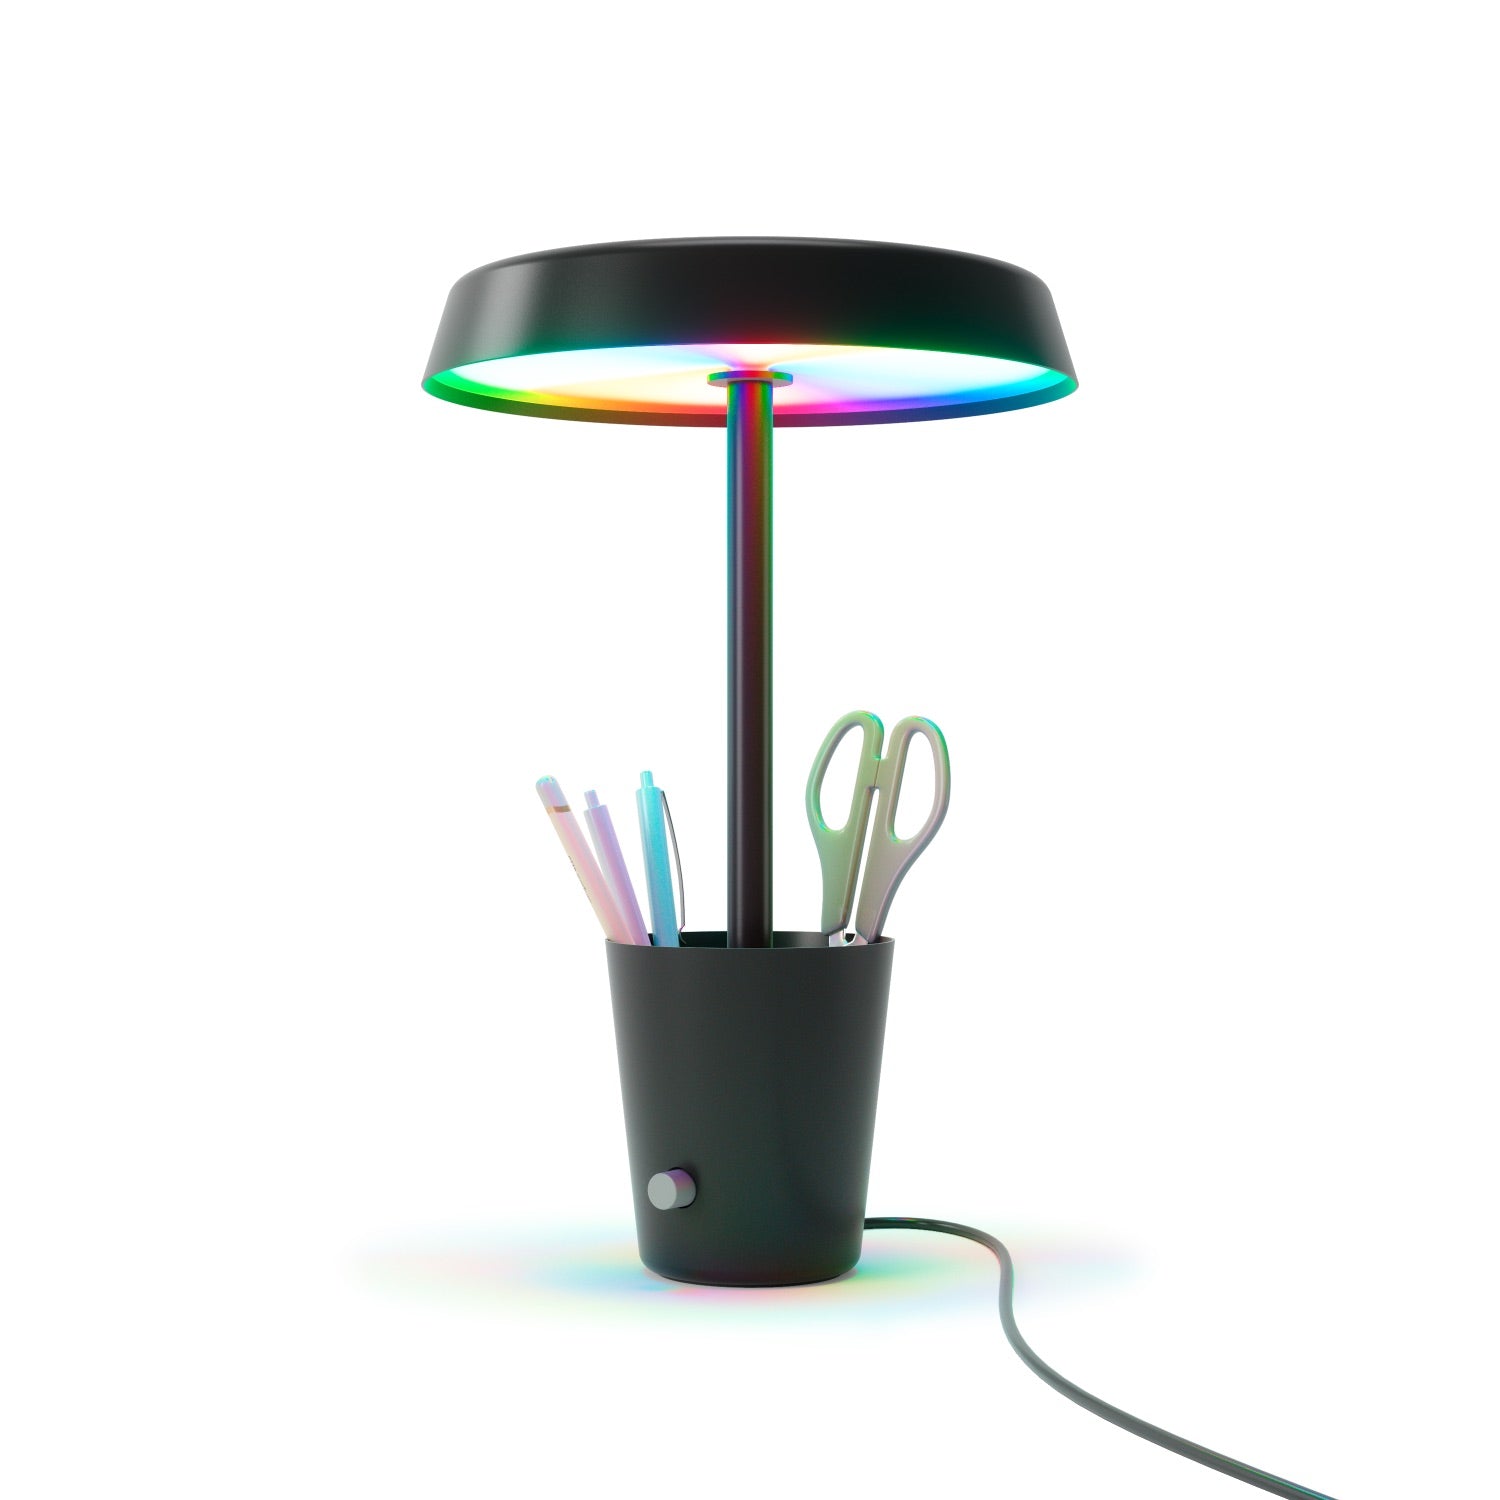 Umbra Cup Smart Lamp